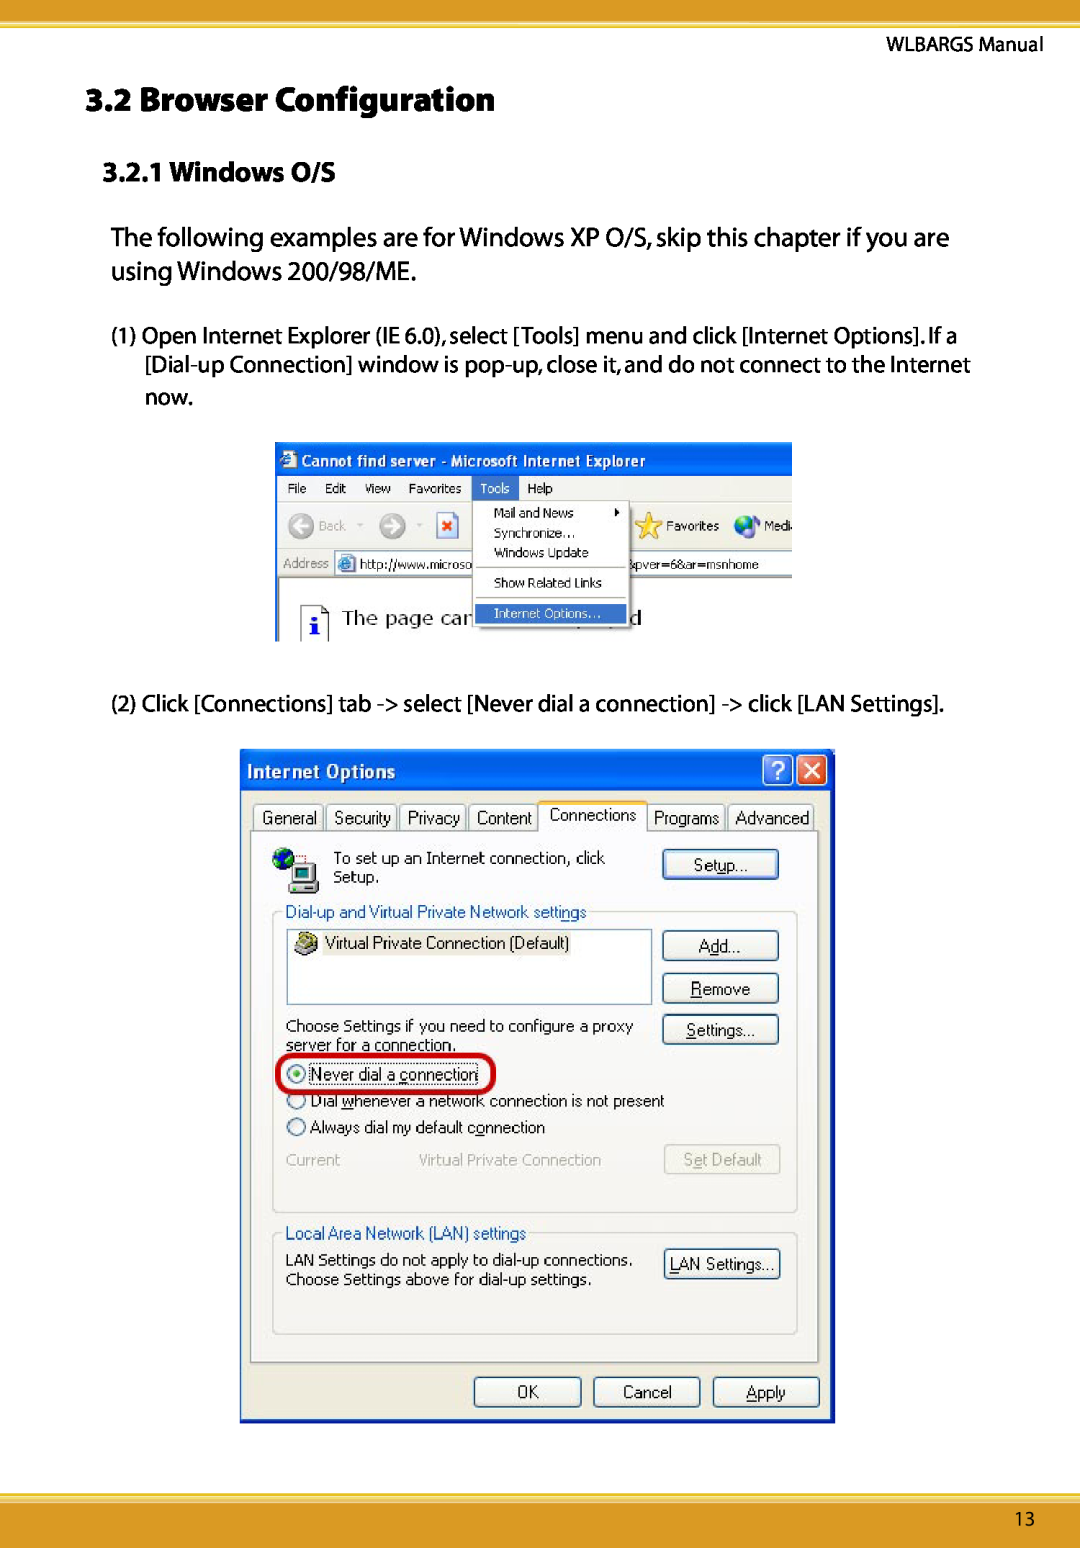 Allied Telesis CG-WLBARGS manual Browser Configuration, Windows O/S 